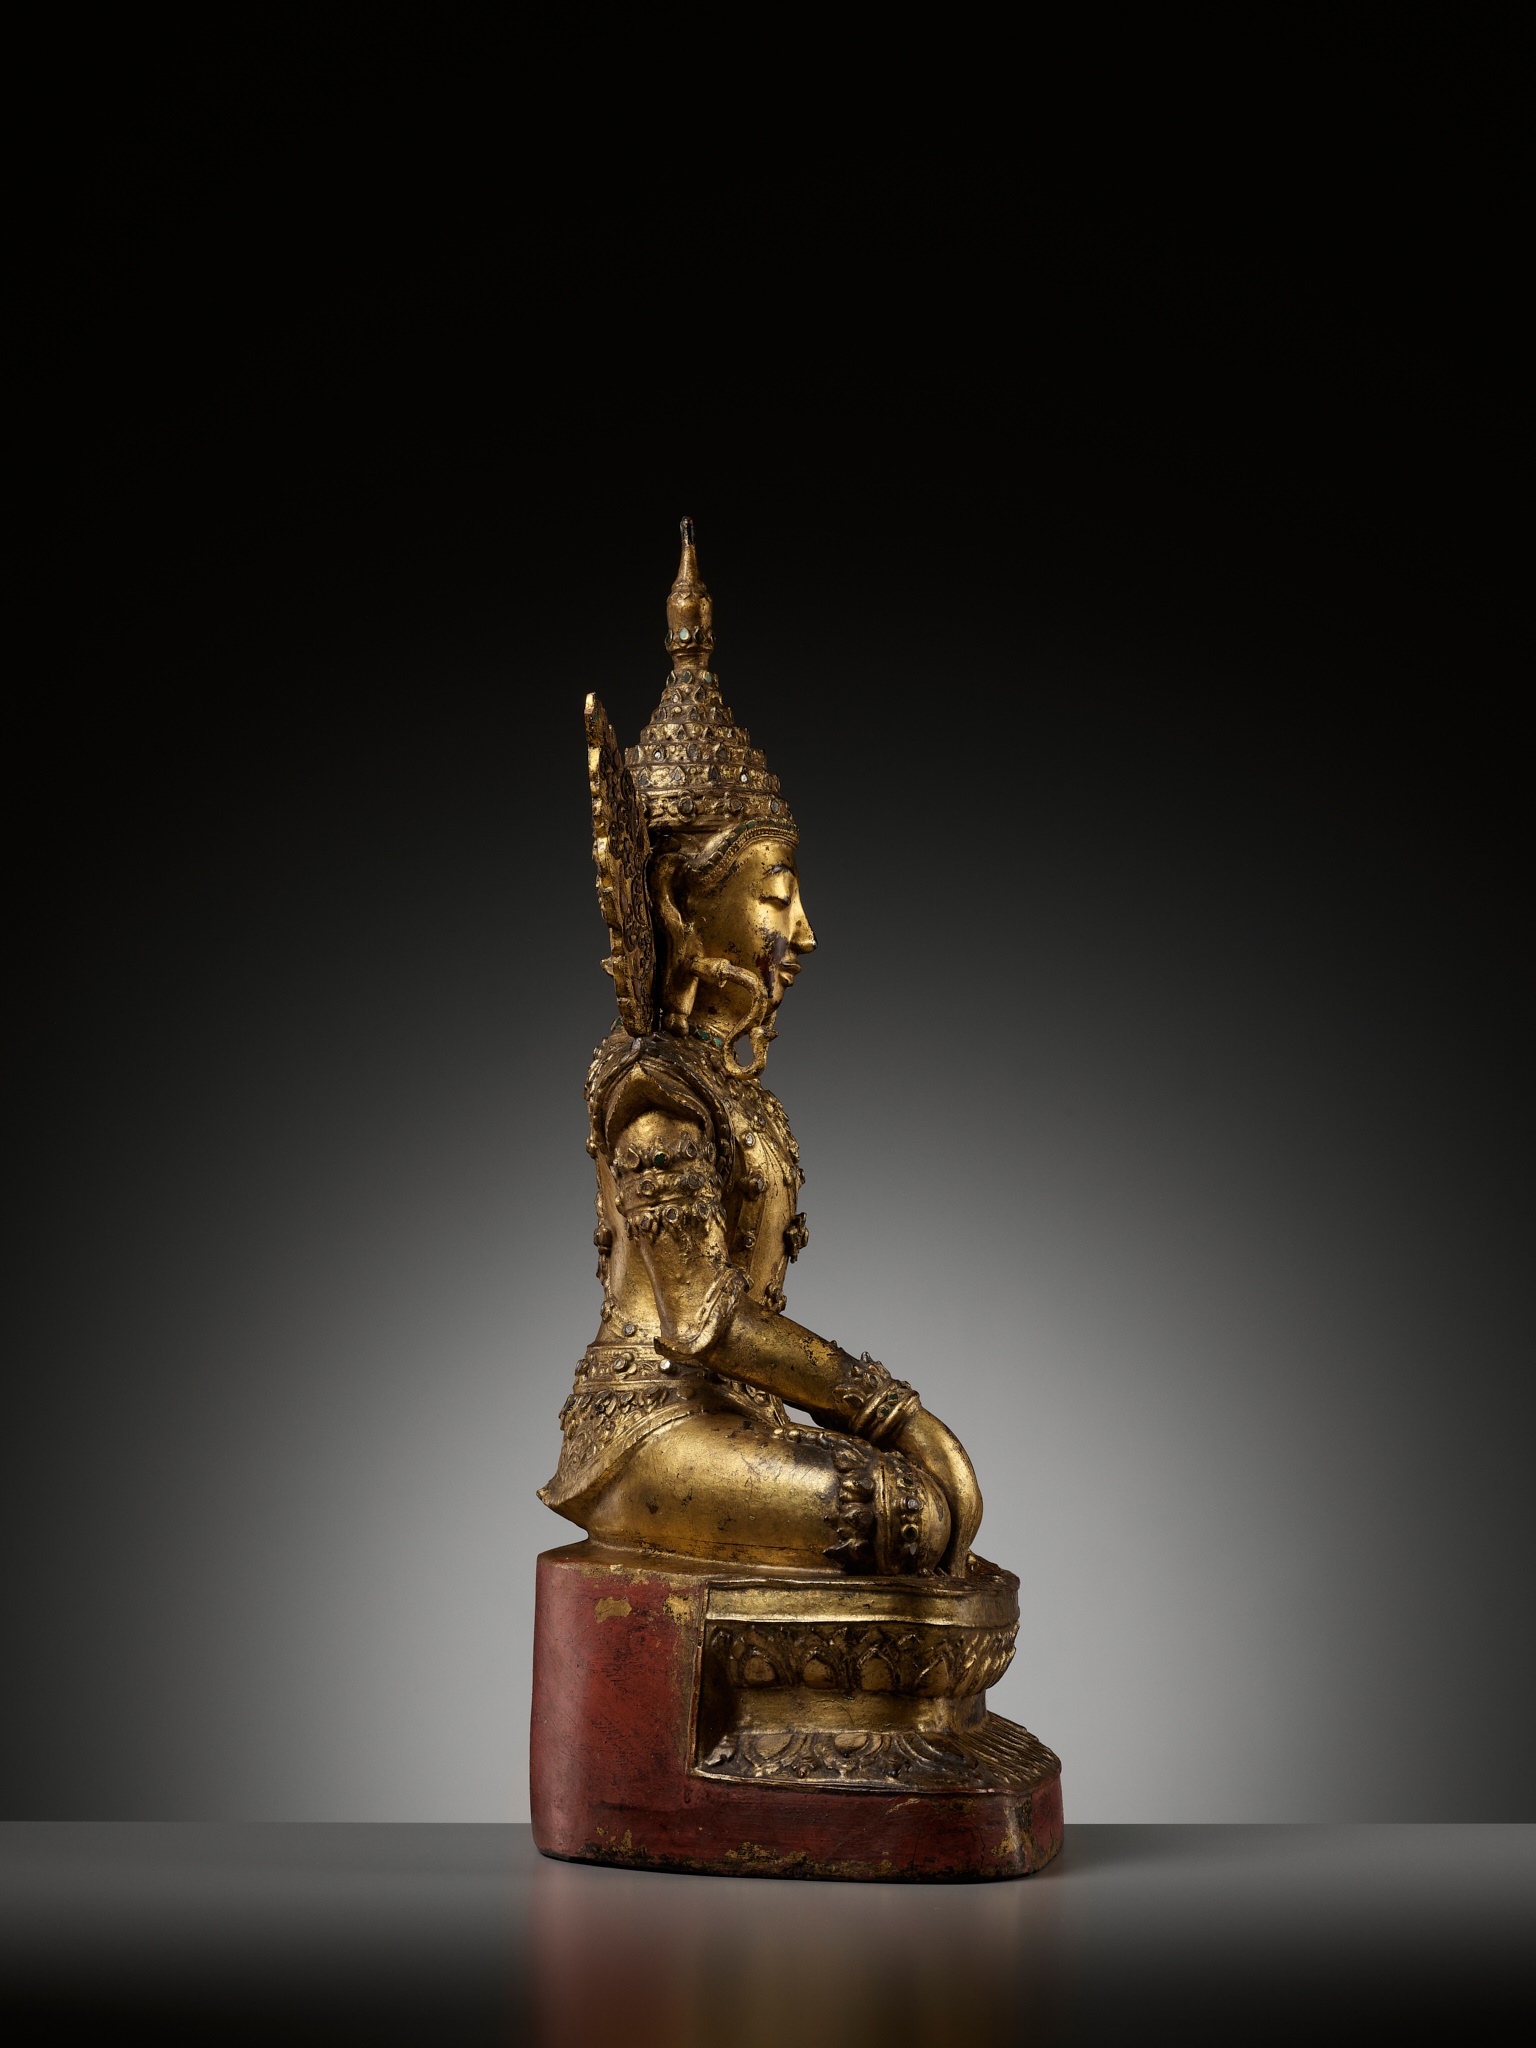 A GILT-LACQUERED WOOD FIGURE OF BUDDHA SHAKYAMUNI, SHAN STATE, BURMA,LATE 18TH TO EARLY 19TH CENTURY - Image 8 of 9